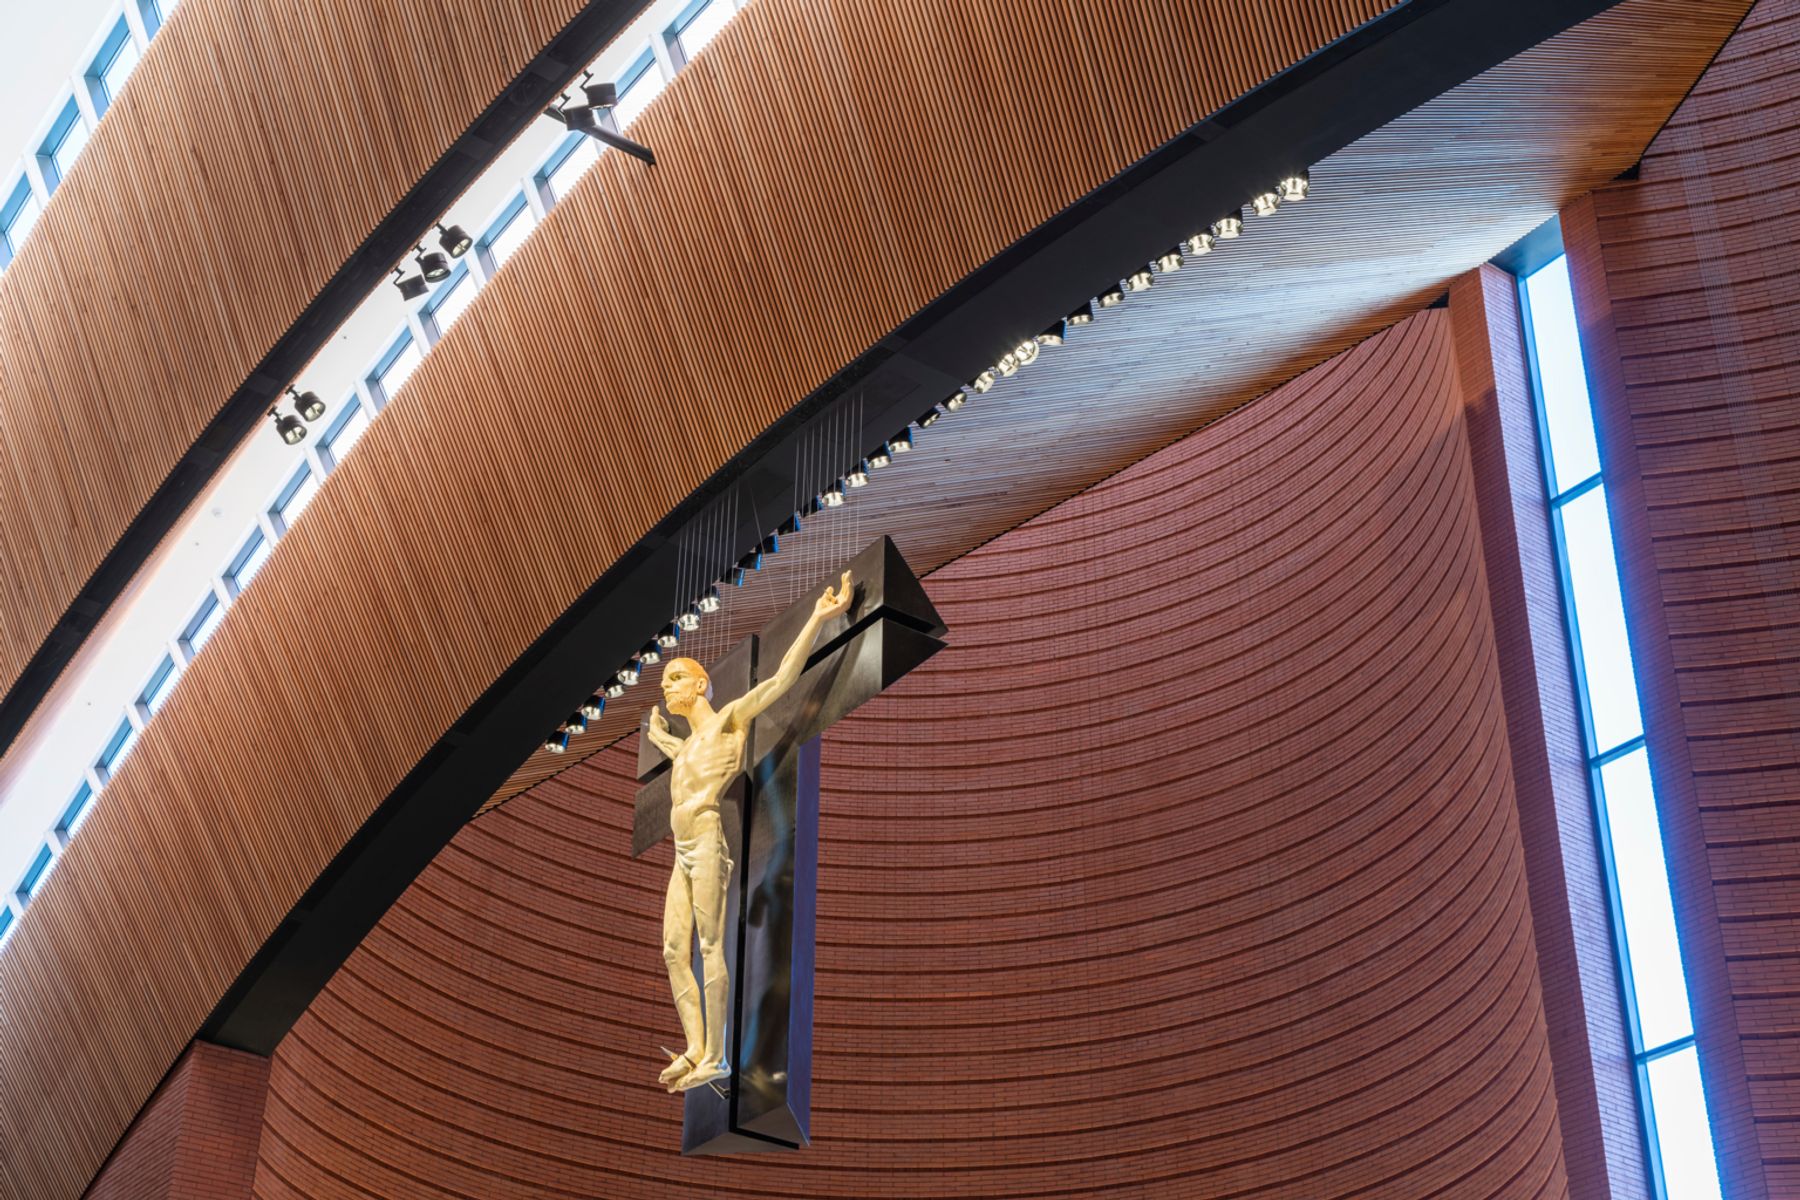 The Shrine of our Lady Rosary of NamYang, Südkorea. Architekt: Mario Botta, Mendrisio. Lichtplanung: bitzro & partners, Seoul. Fotografie: Efrain Mendez Tabares, Spanien